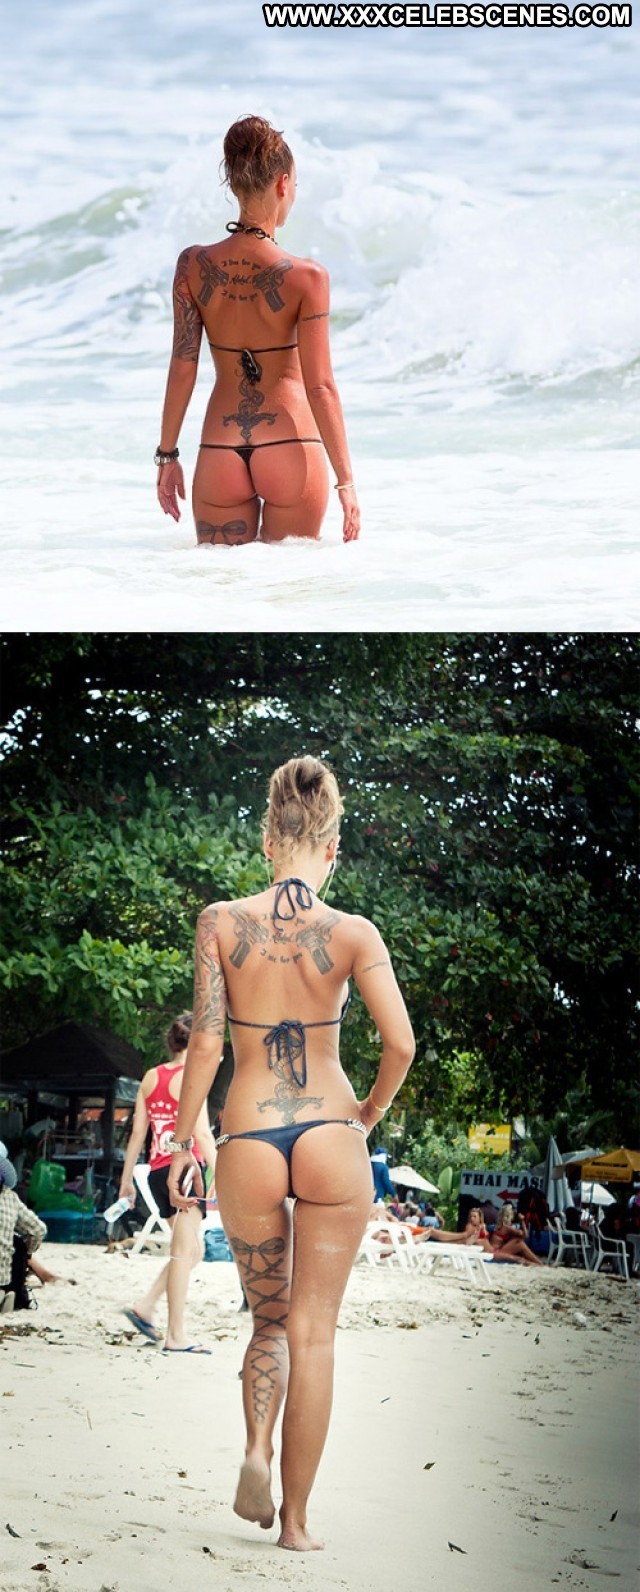 Dua Lipa The Image Nude Topless Bikini Celebrity Beautiful Summer